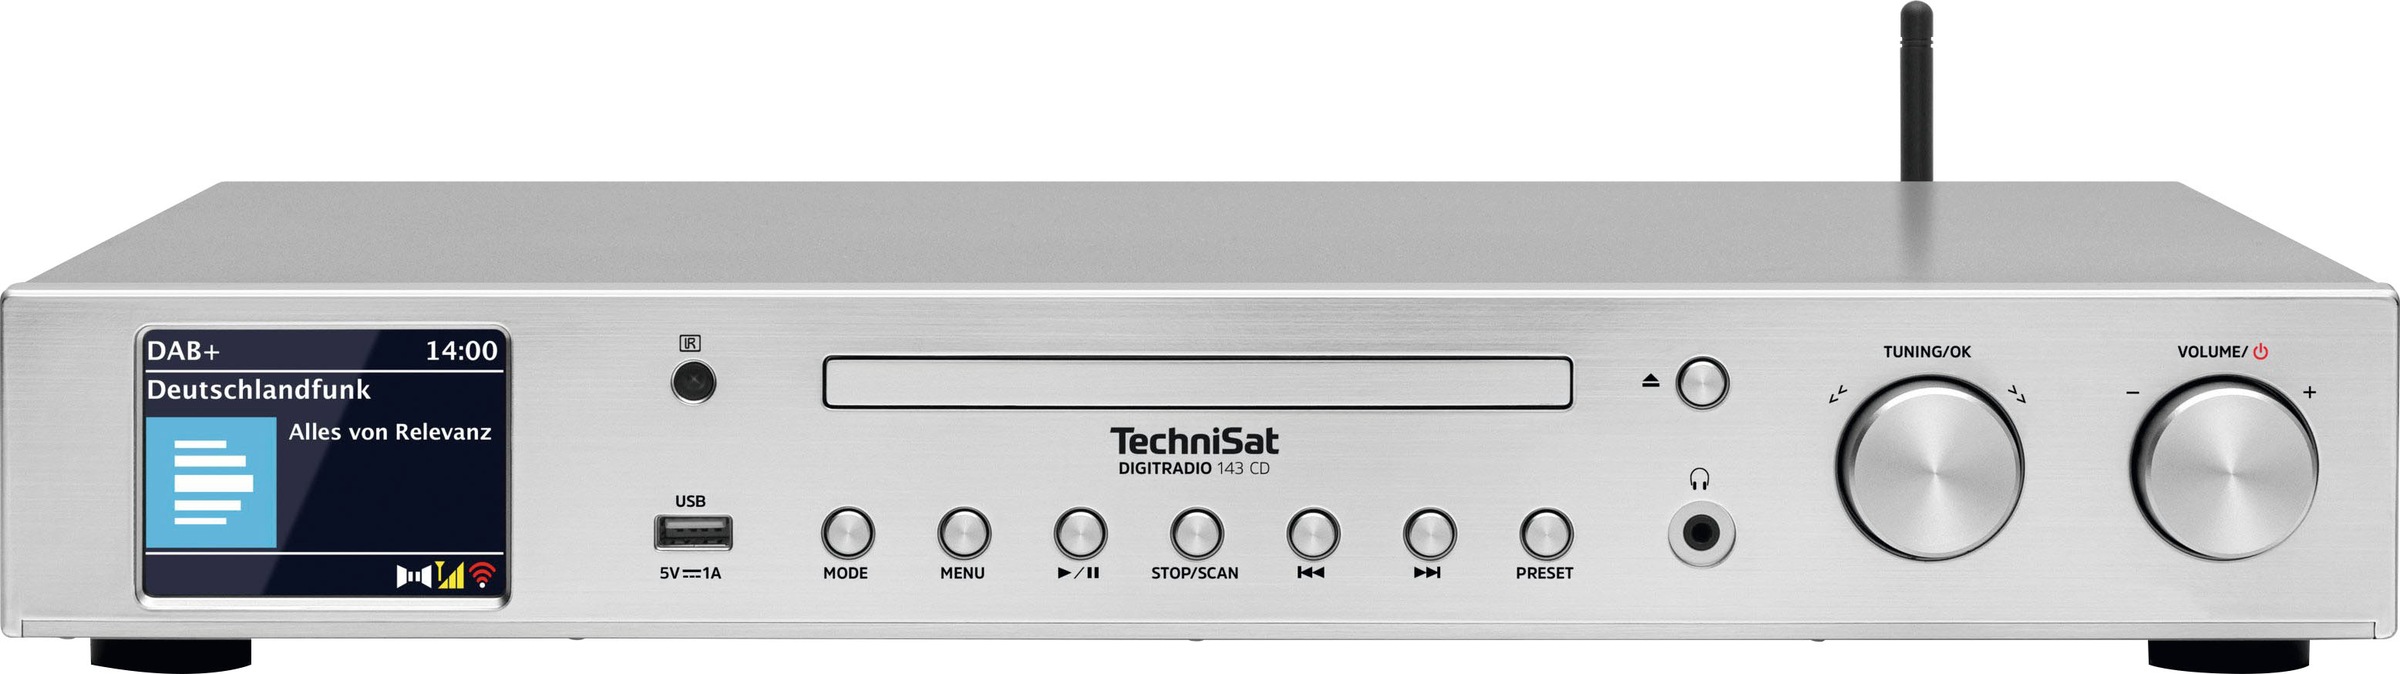 TechniSat Digitalradio (DAB+) »DIGITRADIO 143 CD (V3)«, (Bluetooth-WLAN Internetradio-Digitalradio (DAB+)-UKW mit RDS)